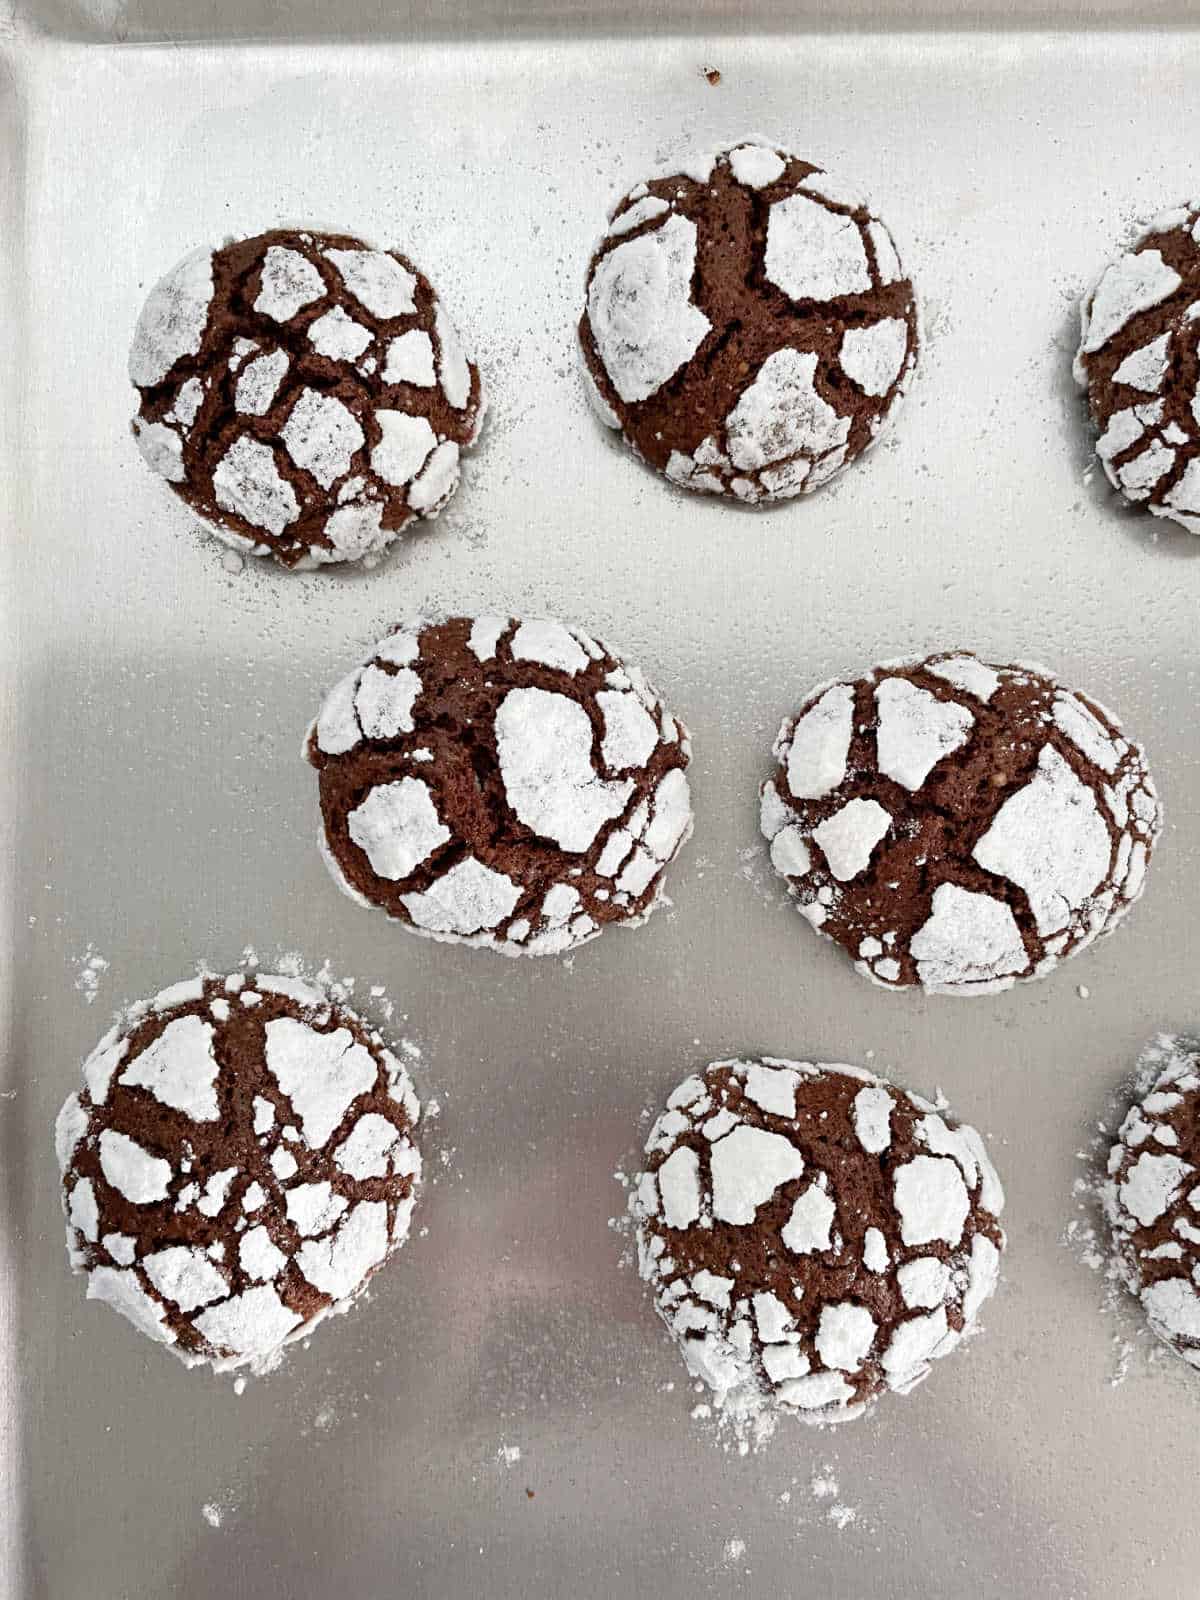 Chocolate crinkle cookies on a metal baking sheet. Top view. 